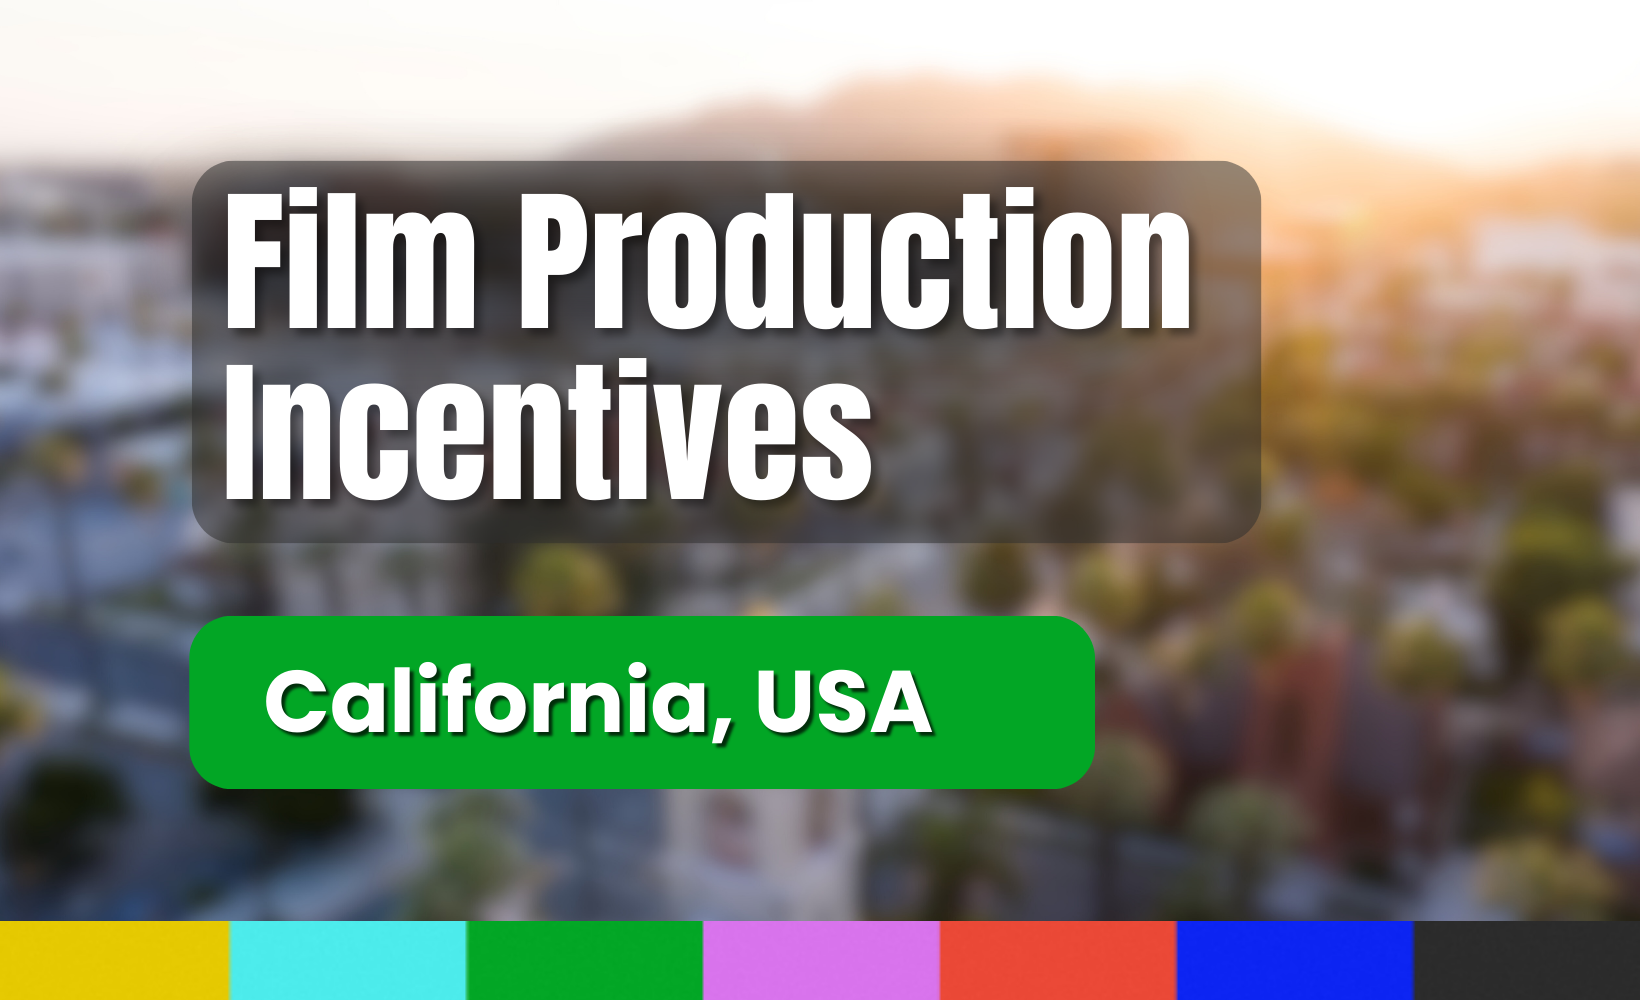 Thumbnail: Film Production Incentives - California USA